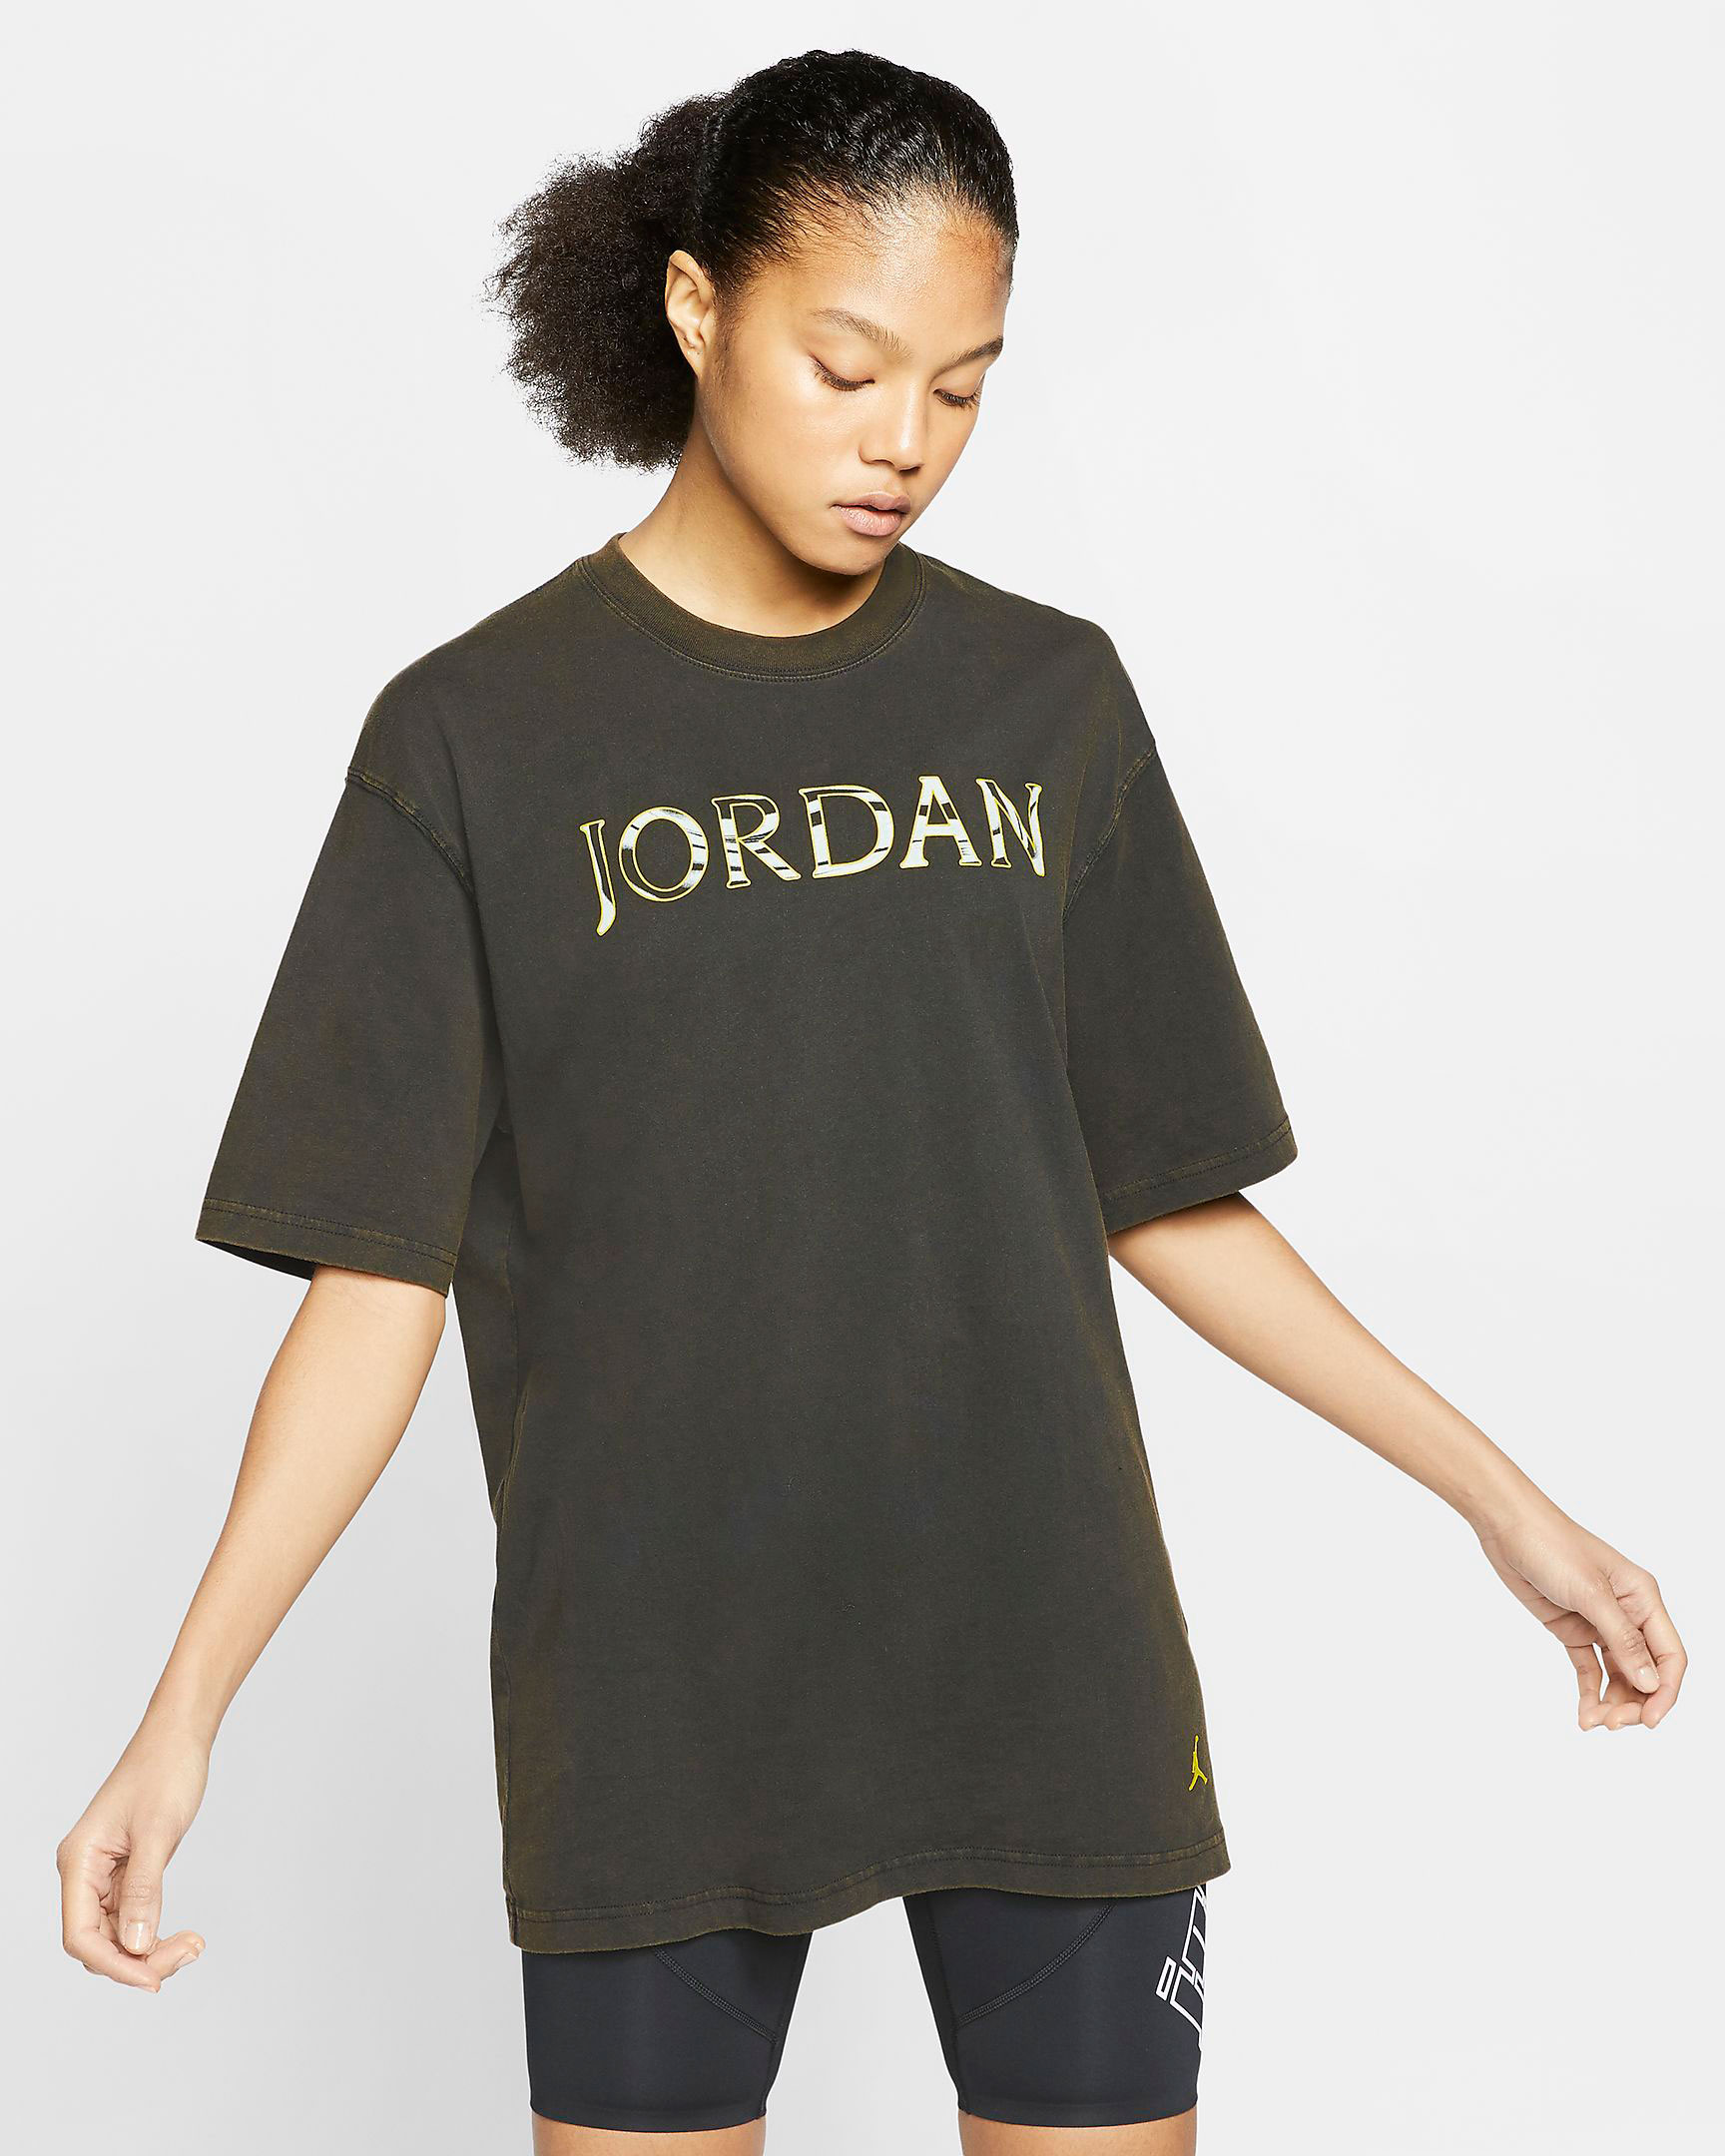 jordan-womens-utility-tee-shirt-black-green.